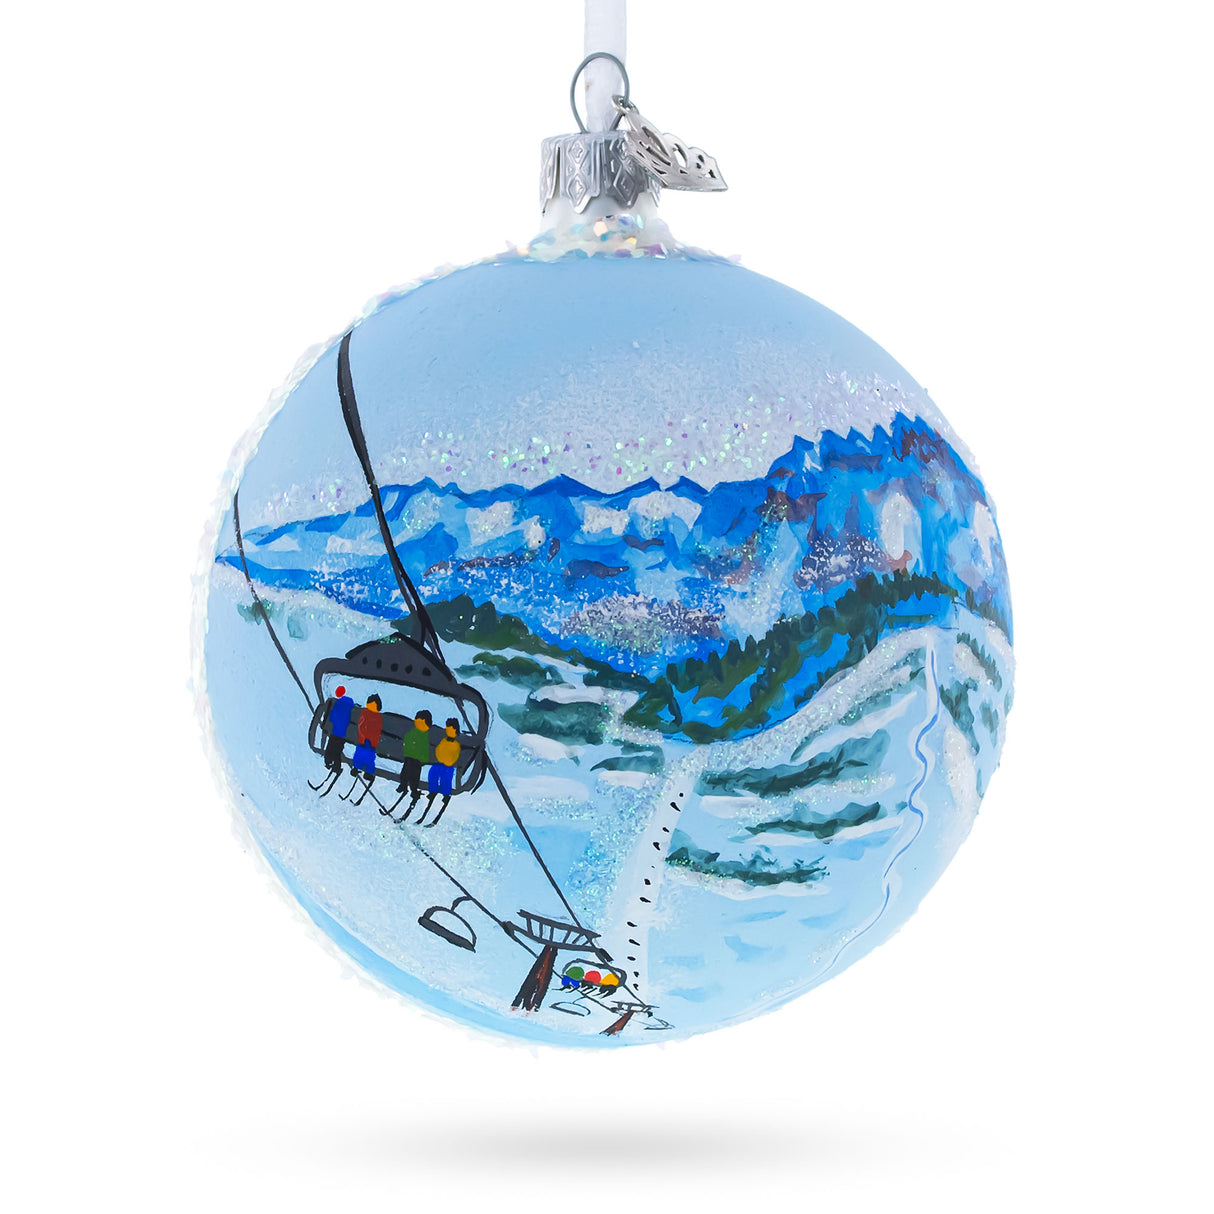 Les Portes du Soleil Ski Resort, Switzerland and France Glass Christmas Ornament in Multi color, Round shape